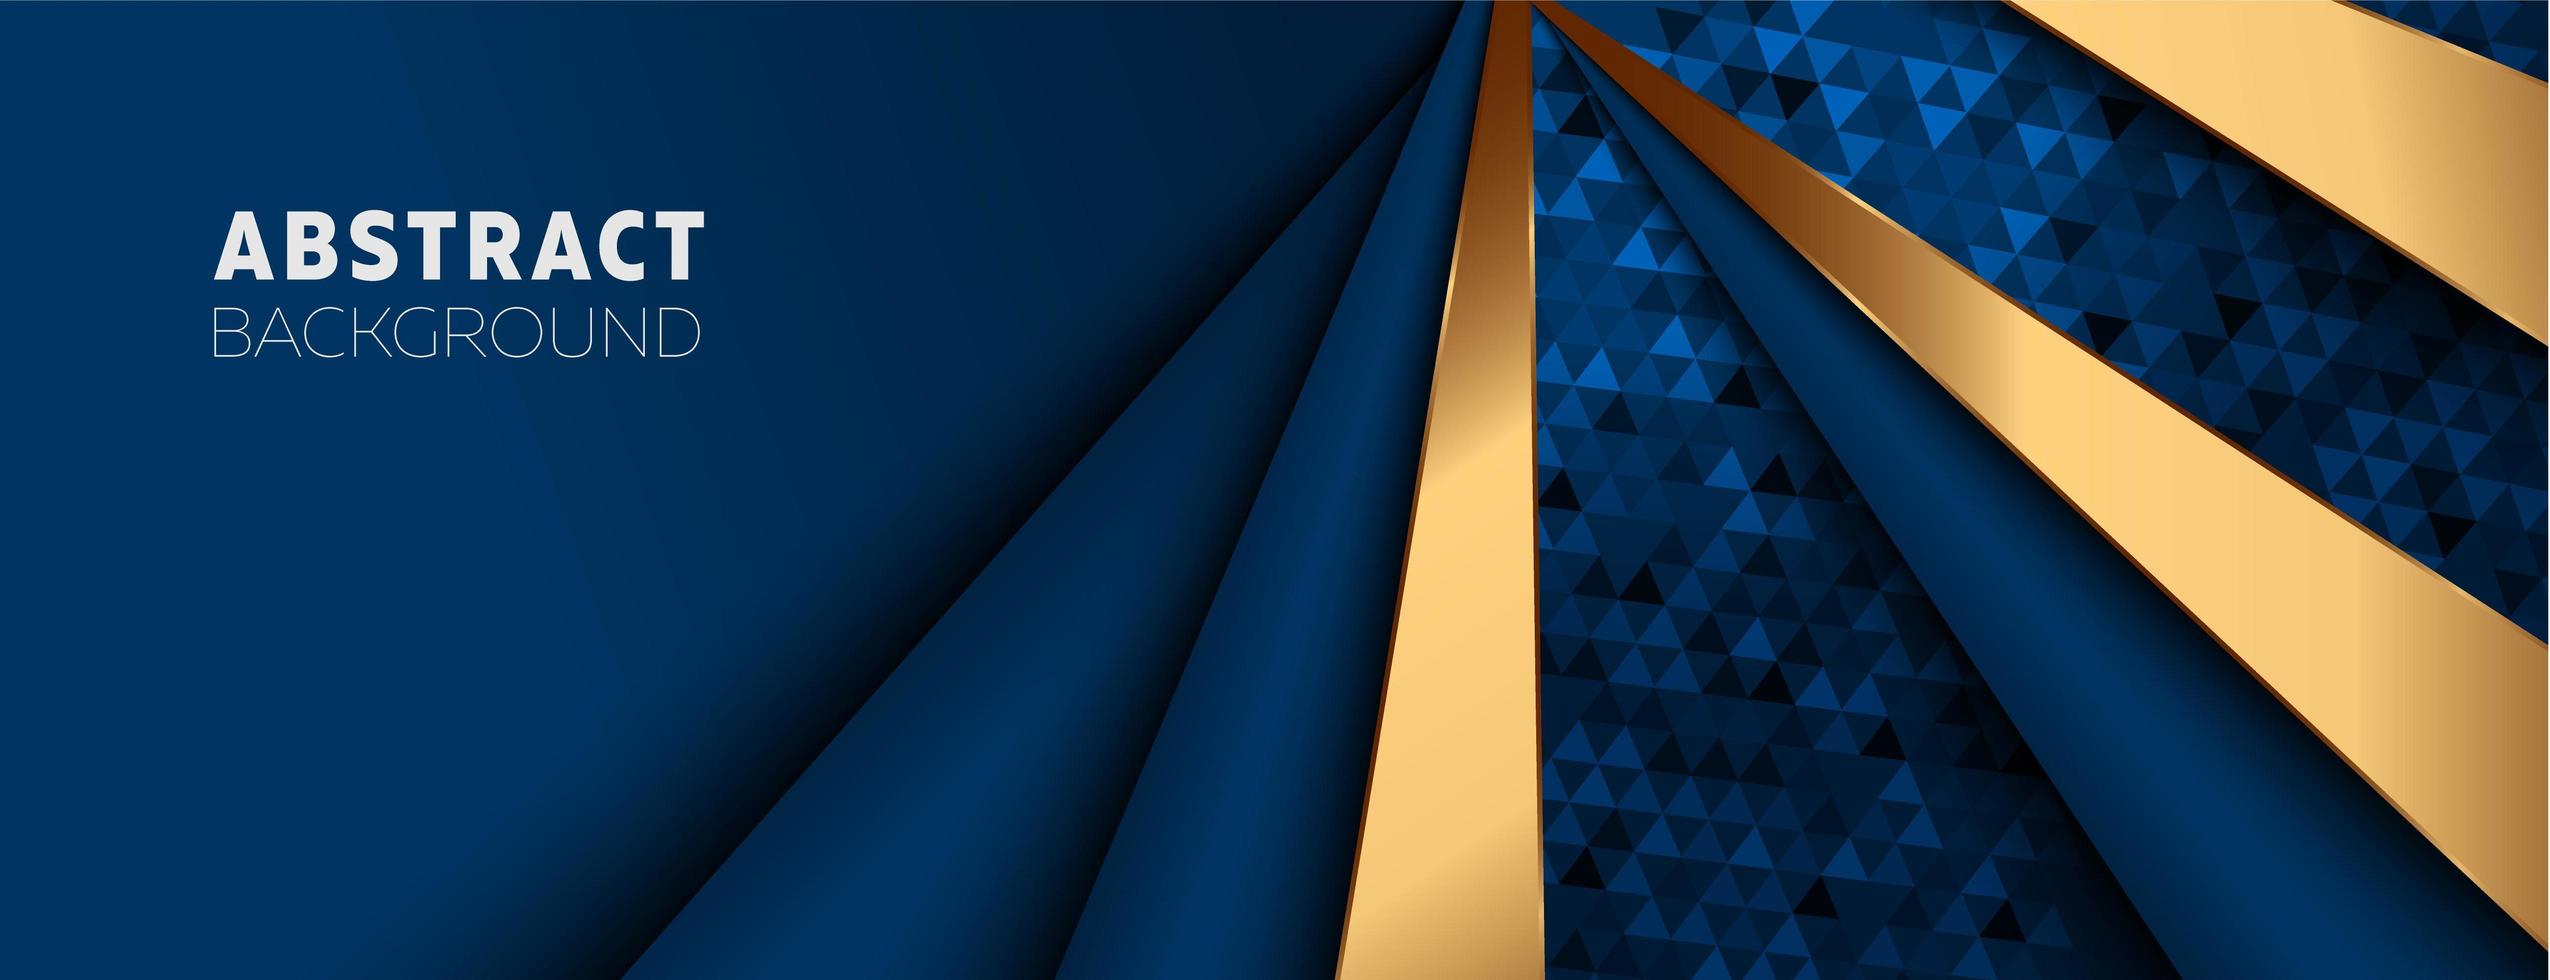 blå och guld vinklade lager banner design med trianglar vektor